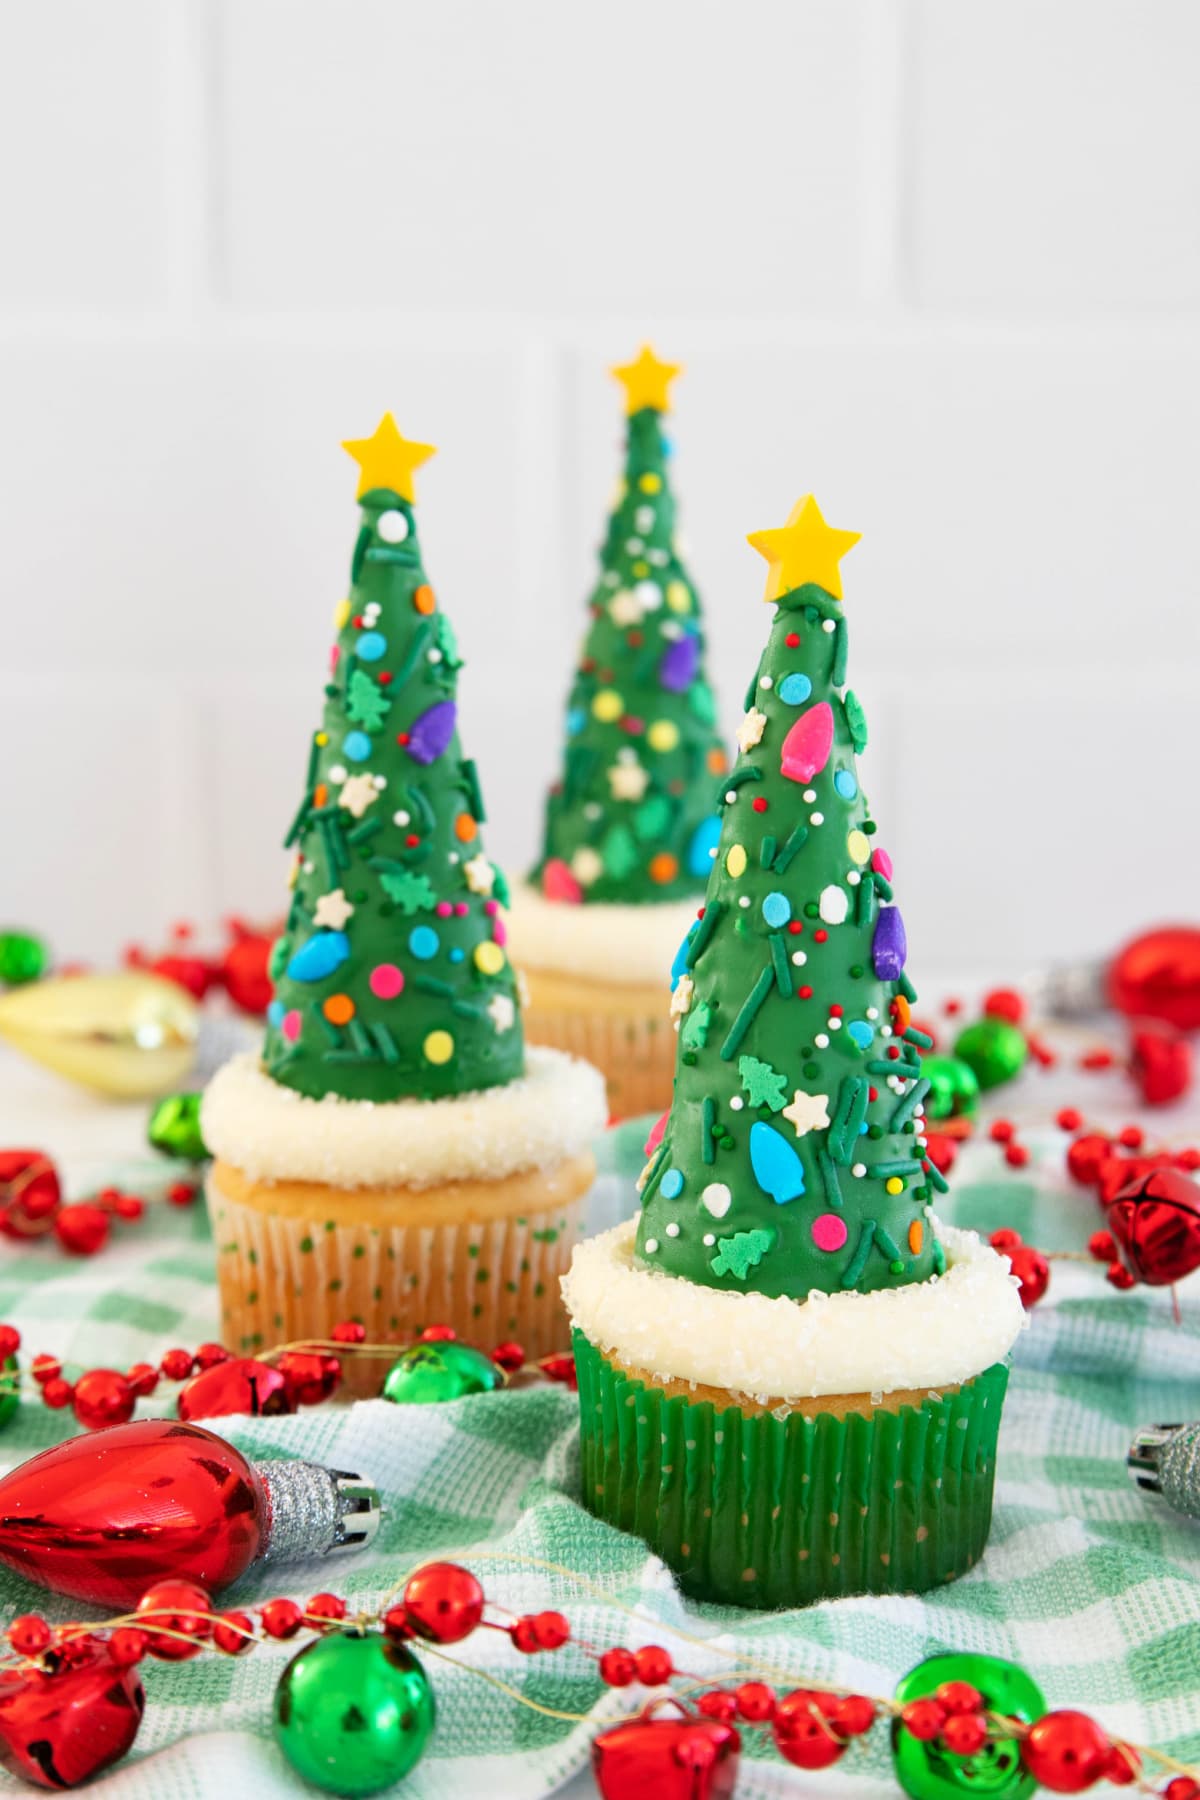 Three cupcakes with ice cream cone Christmas trees